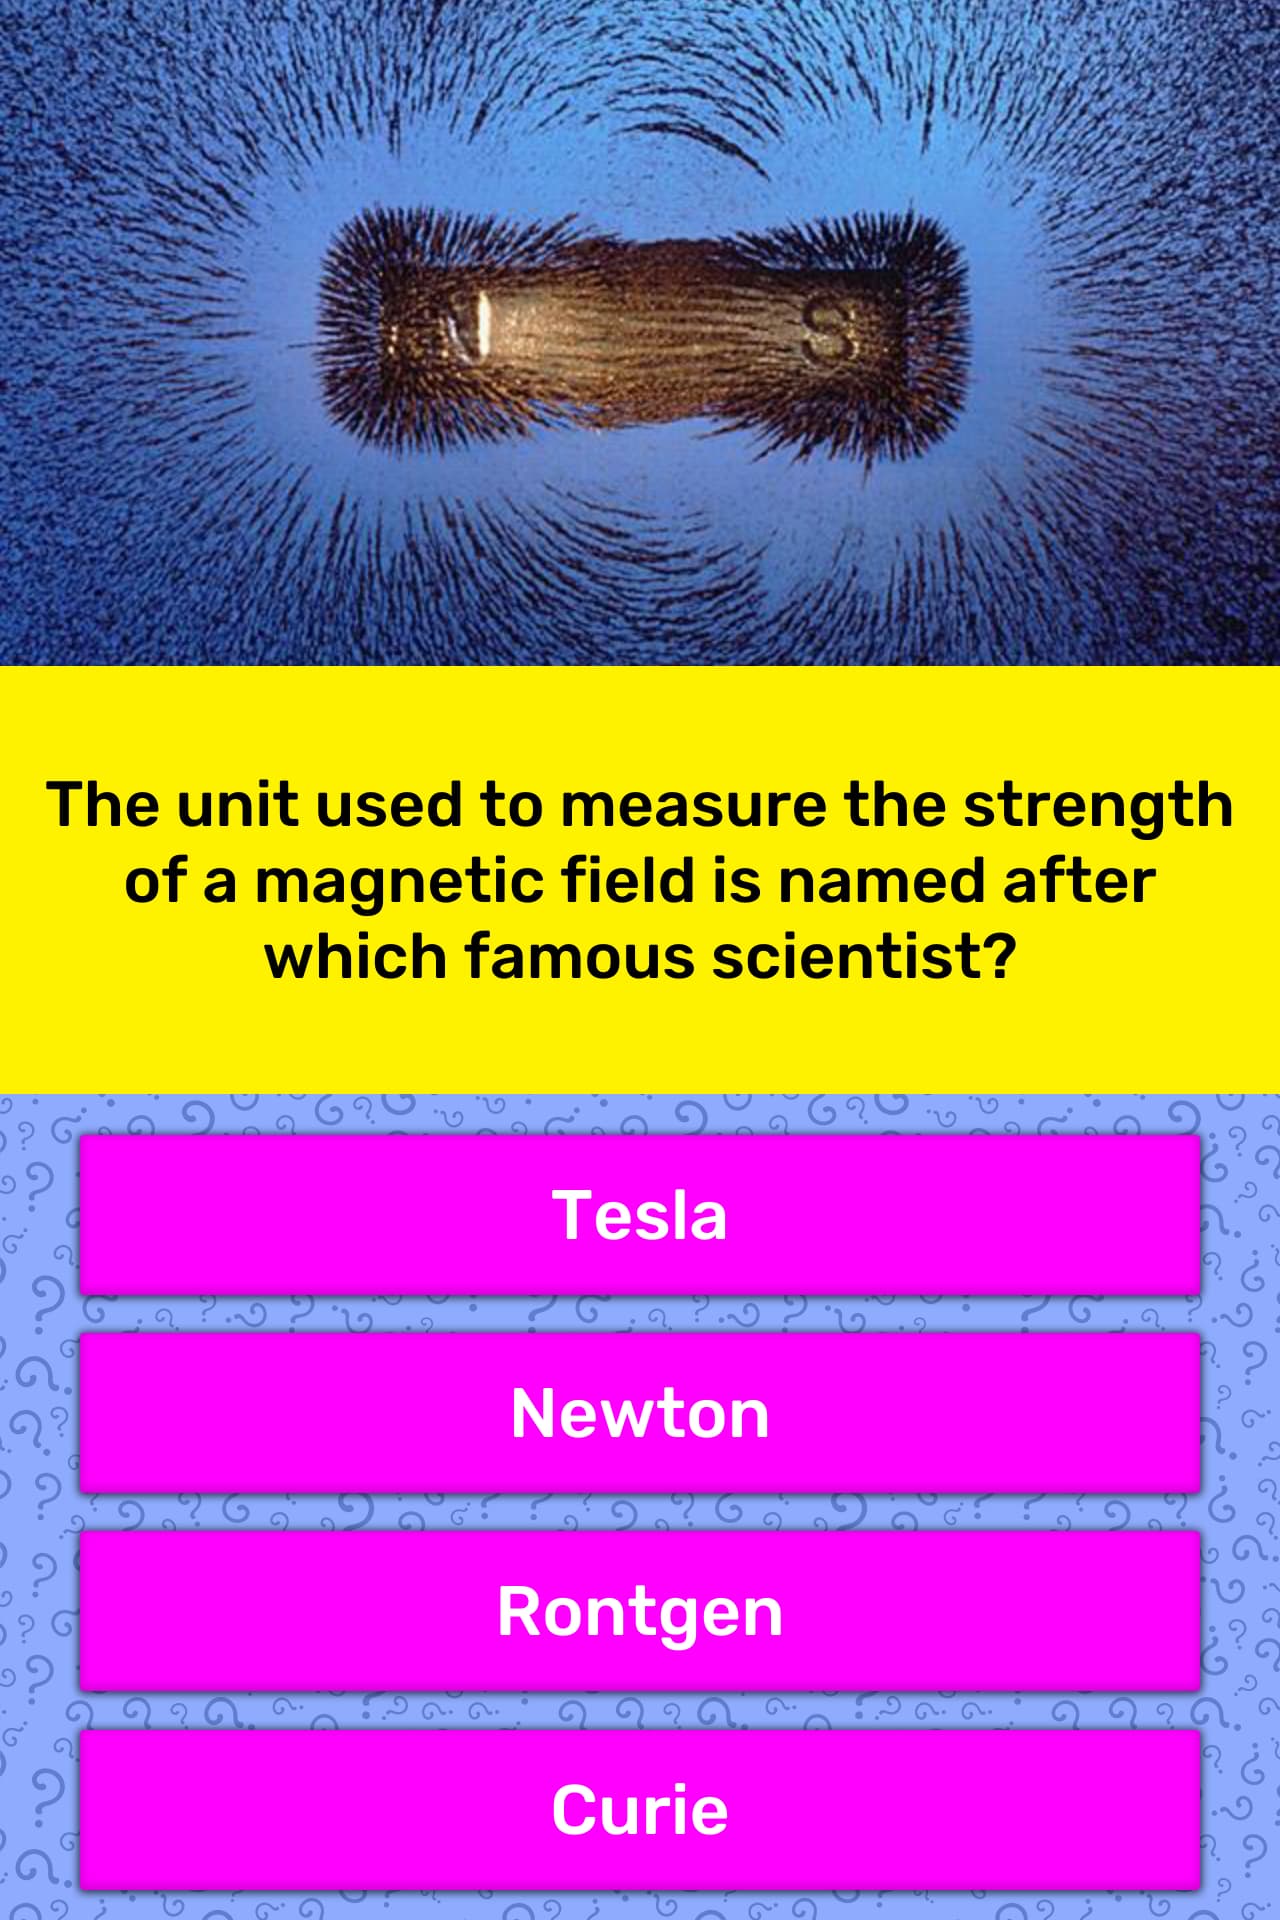 newton unit used to measure